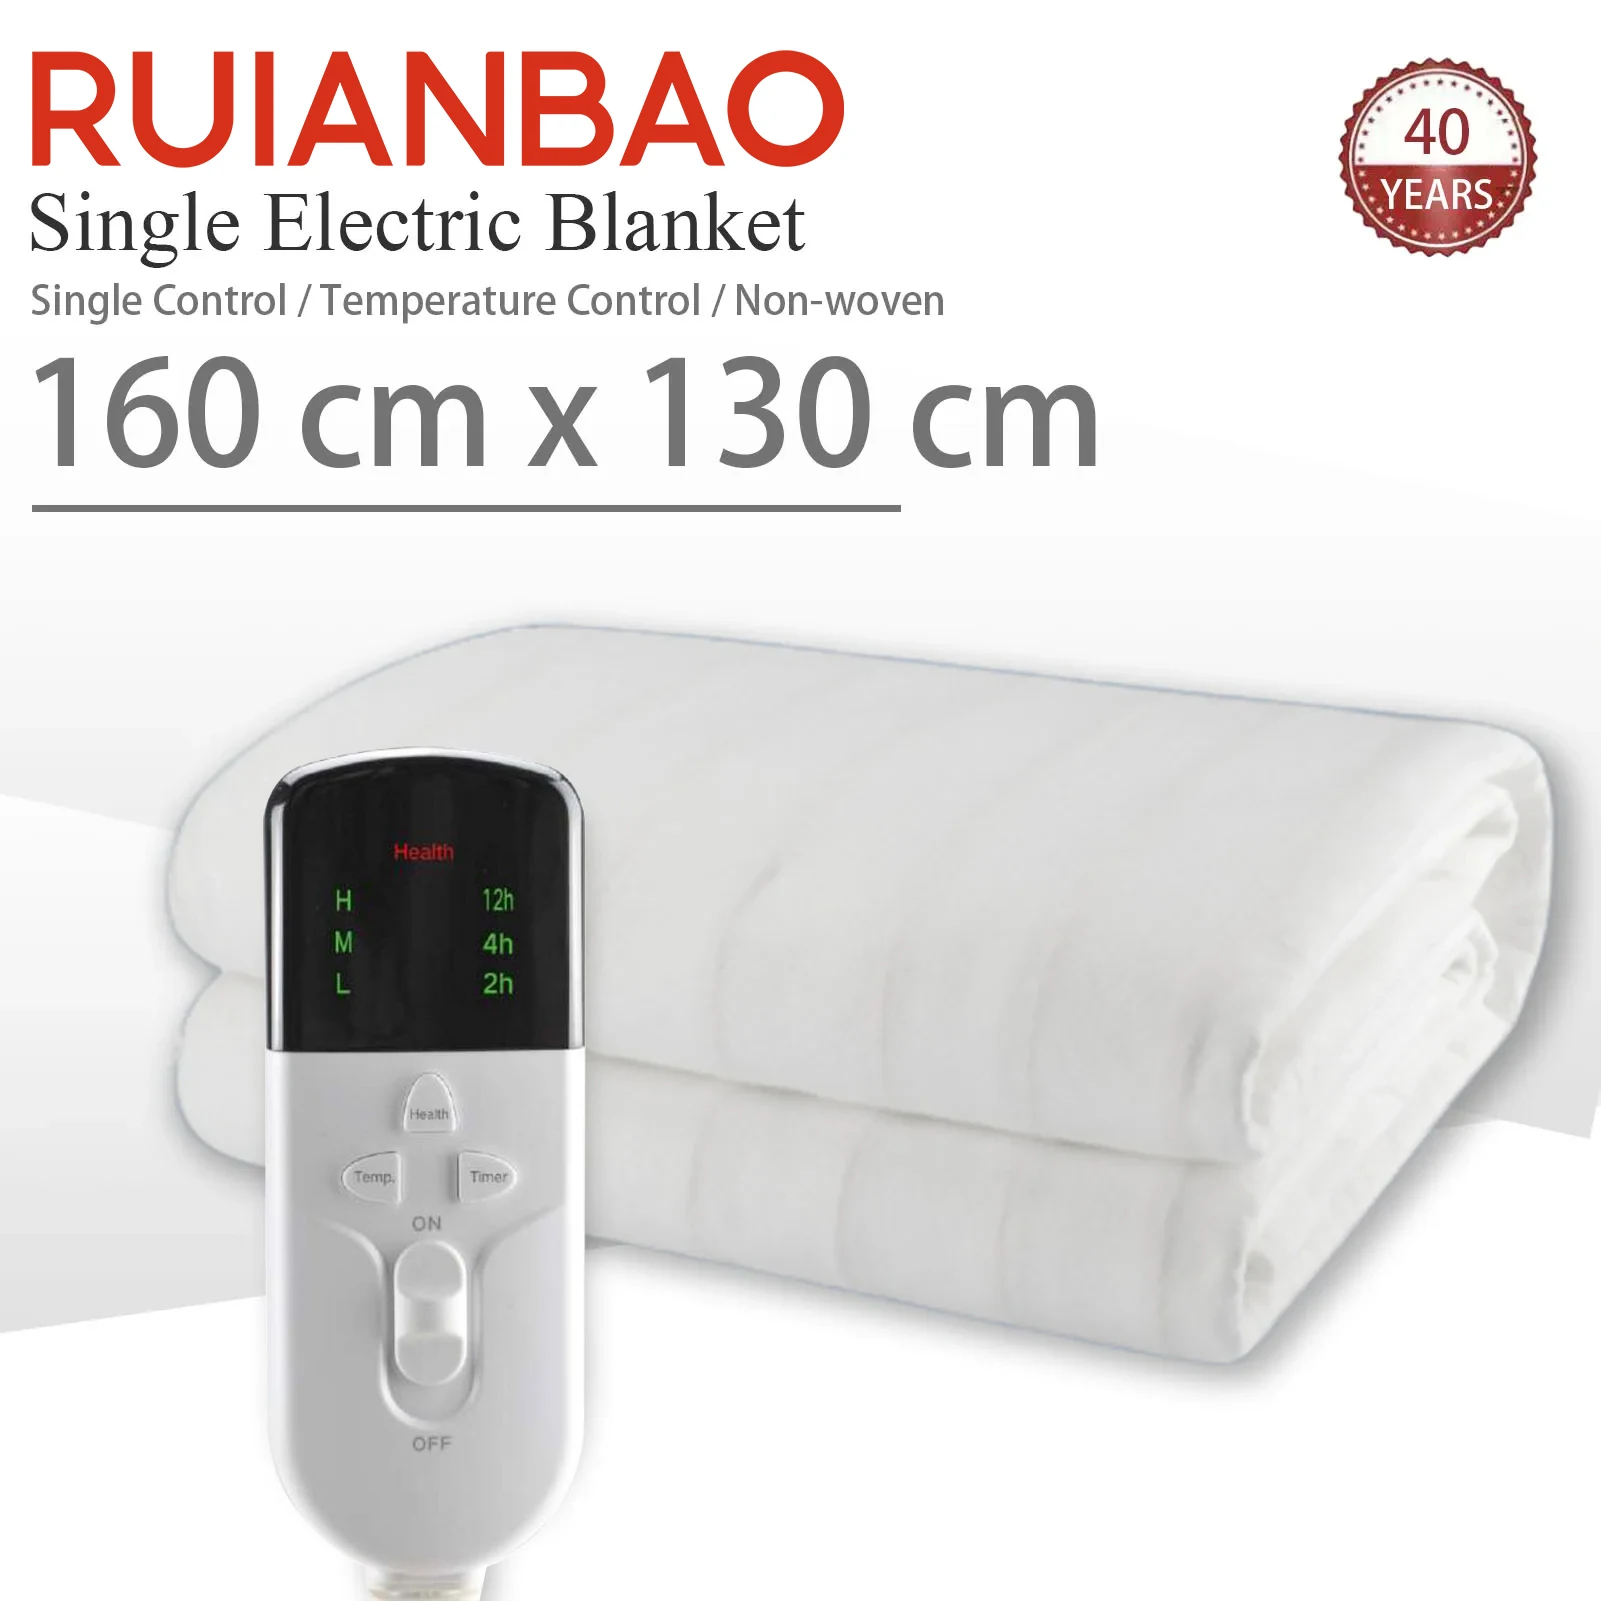 ruianbao-軽量の厚手のベルベットブランケット、電気毛布、家庭用毛布、ダブル快適な毛布、取り外し可能で洗える、230v